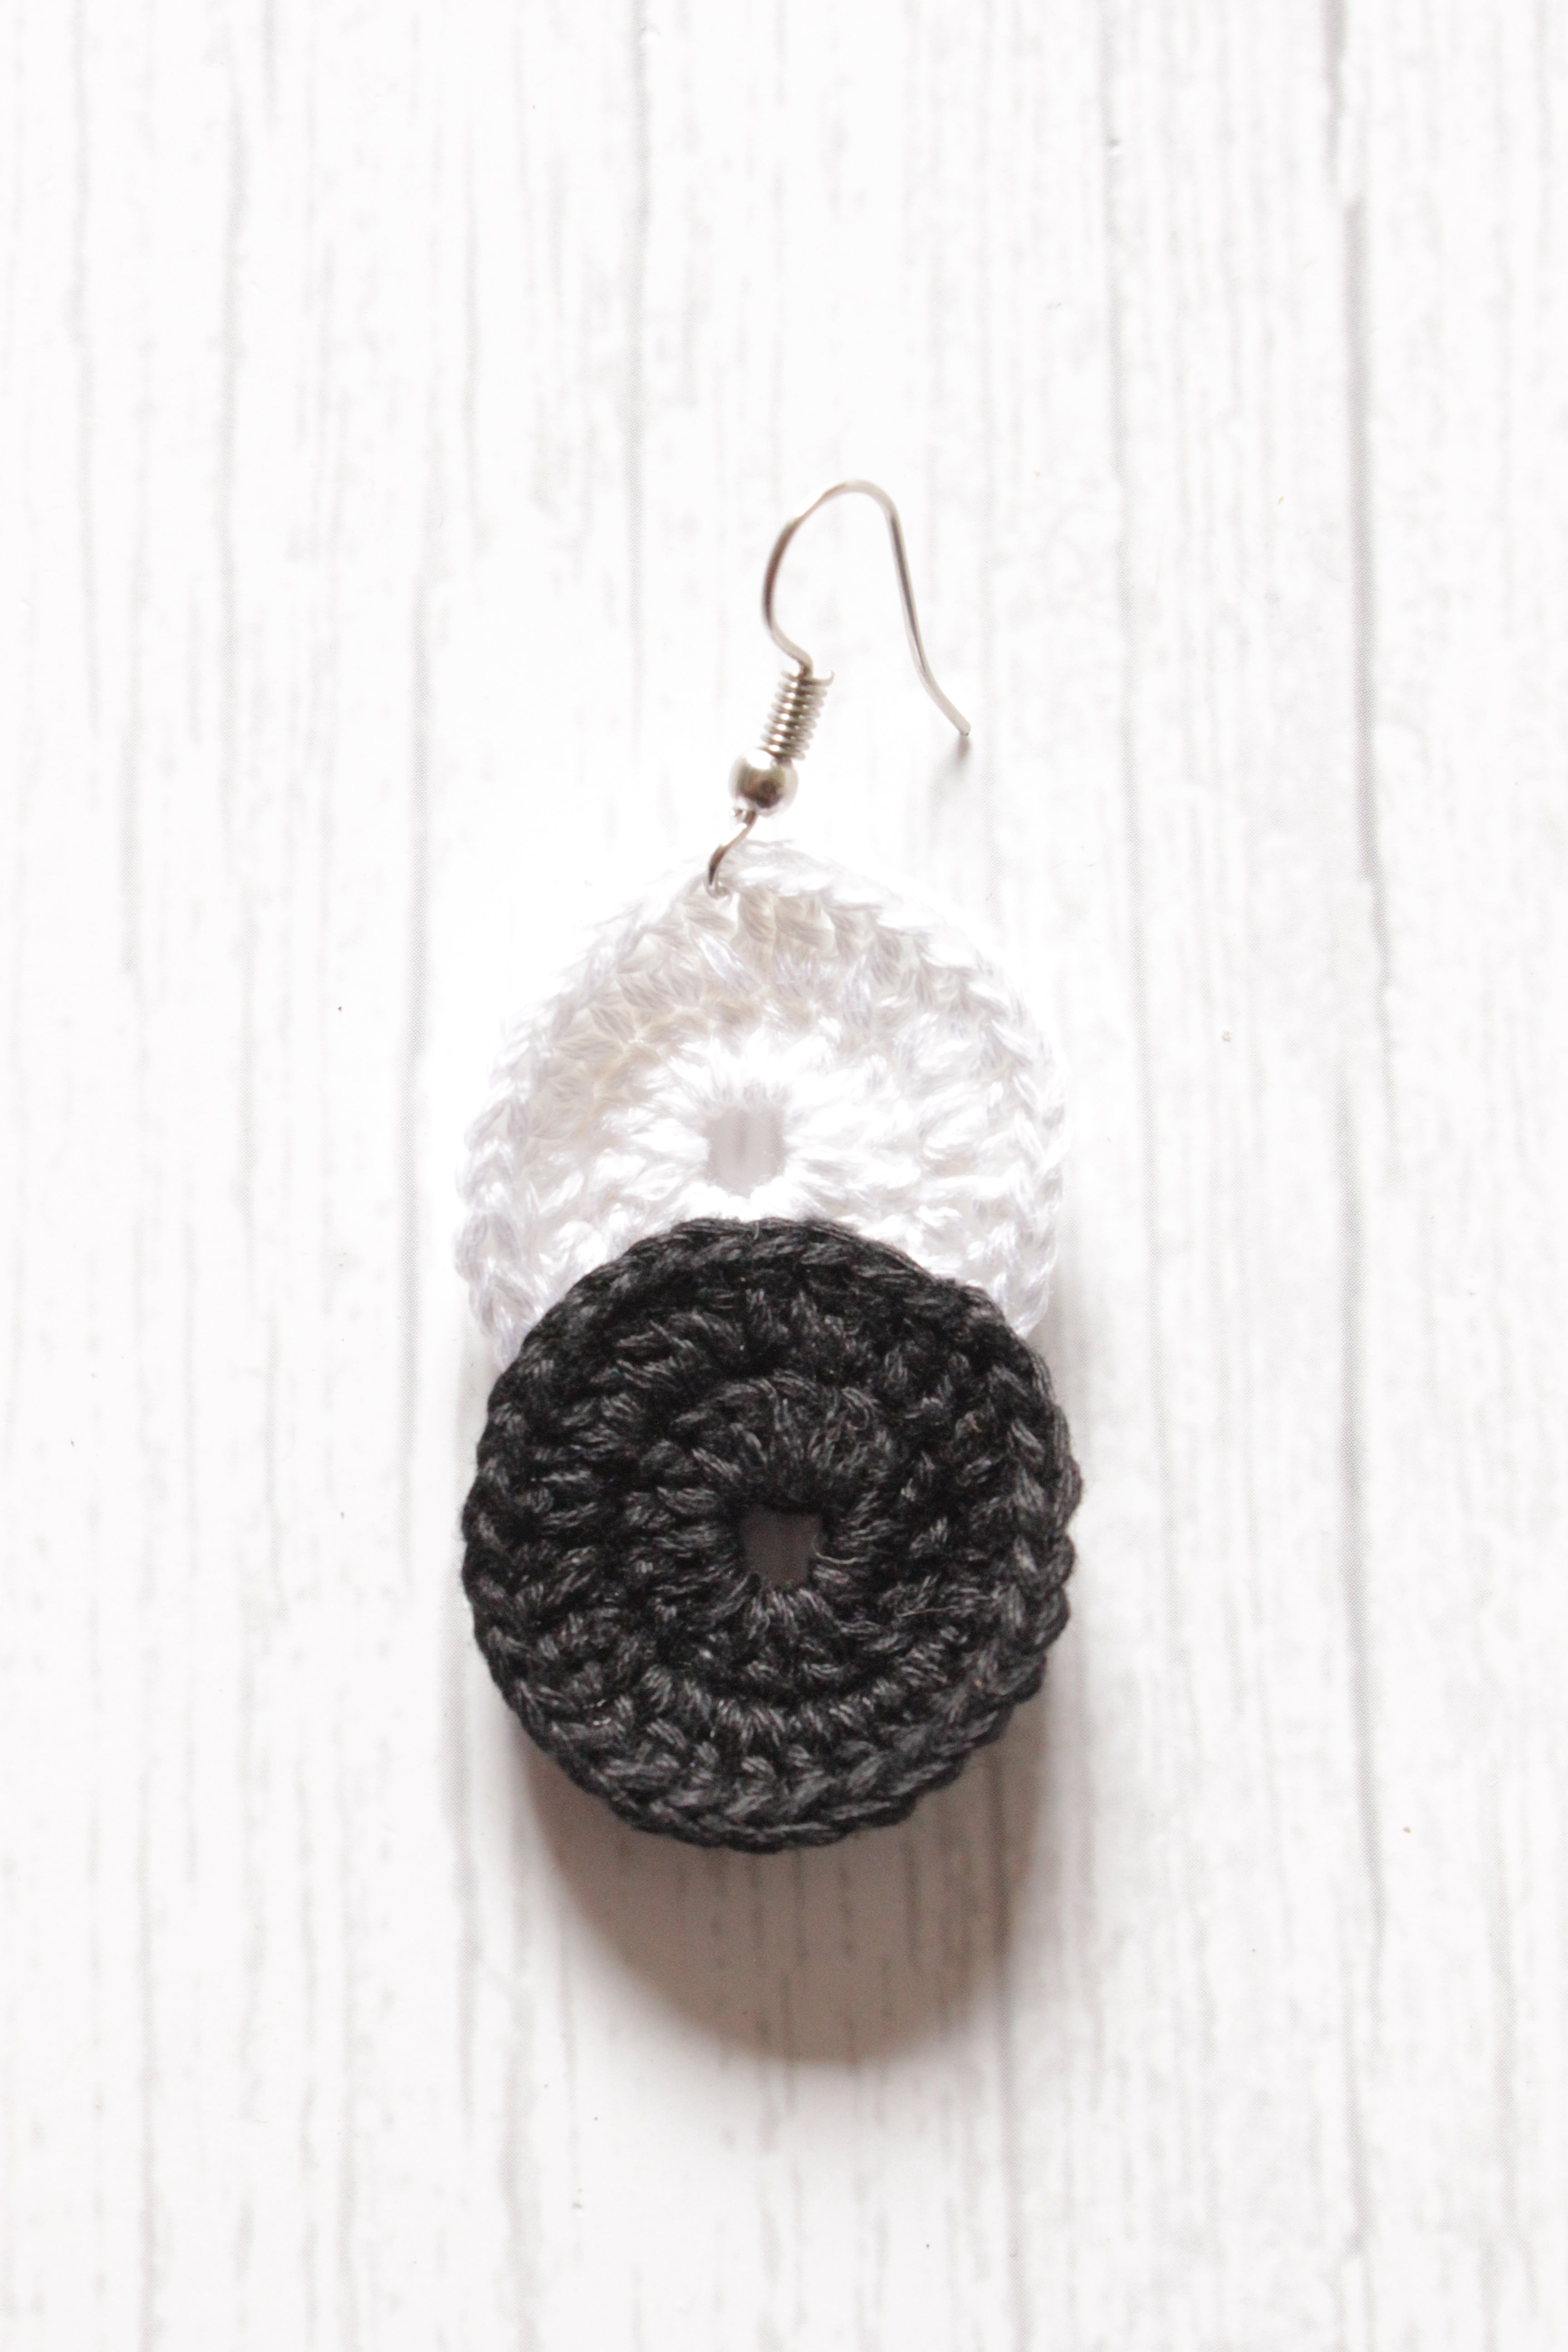 Monochrome 2 Layer Handcrafted Crochet Dangler Earrings